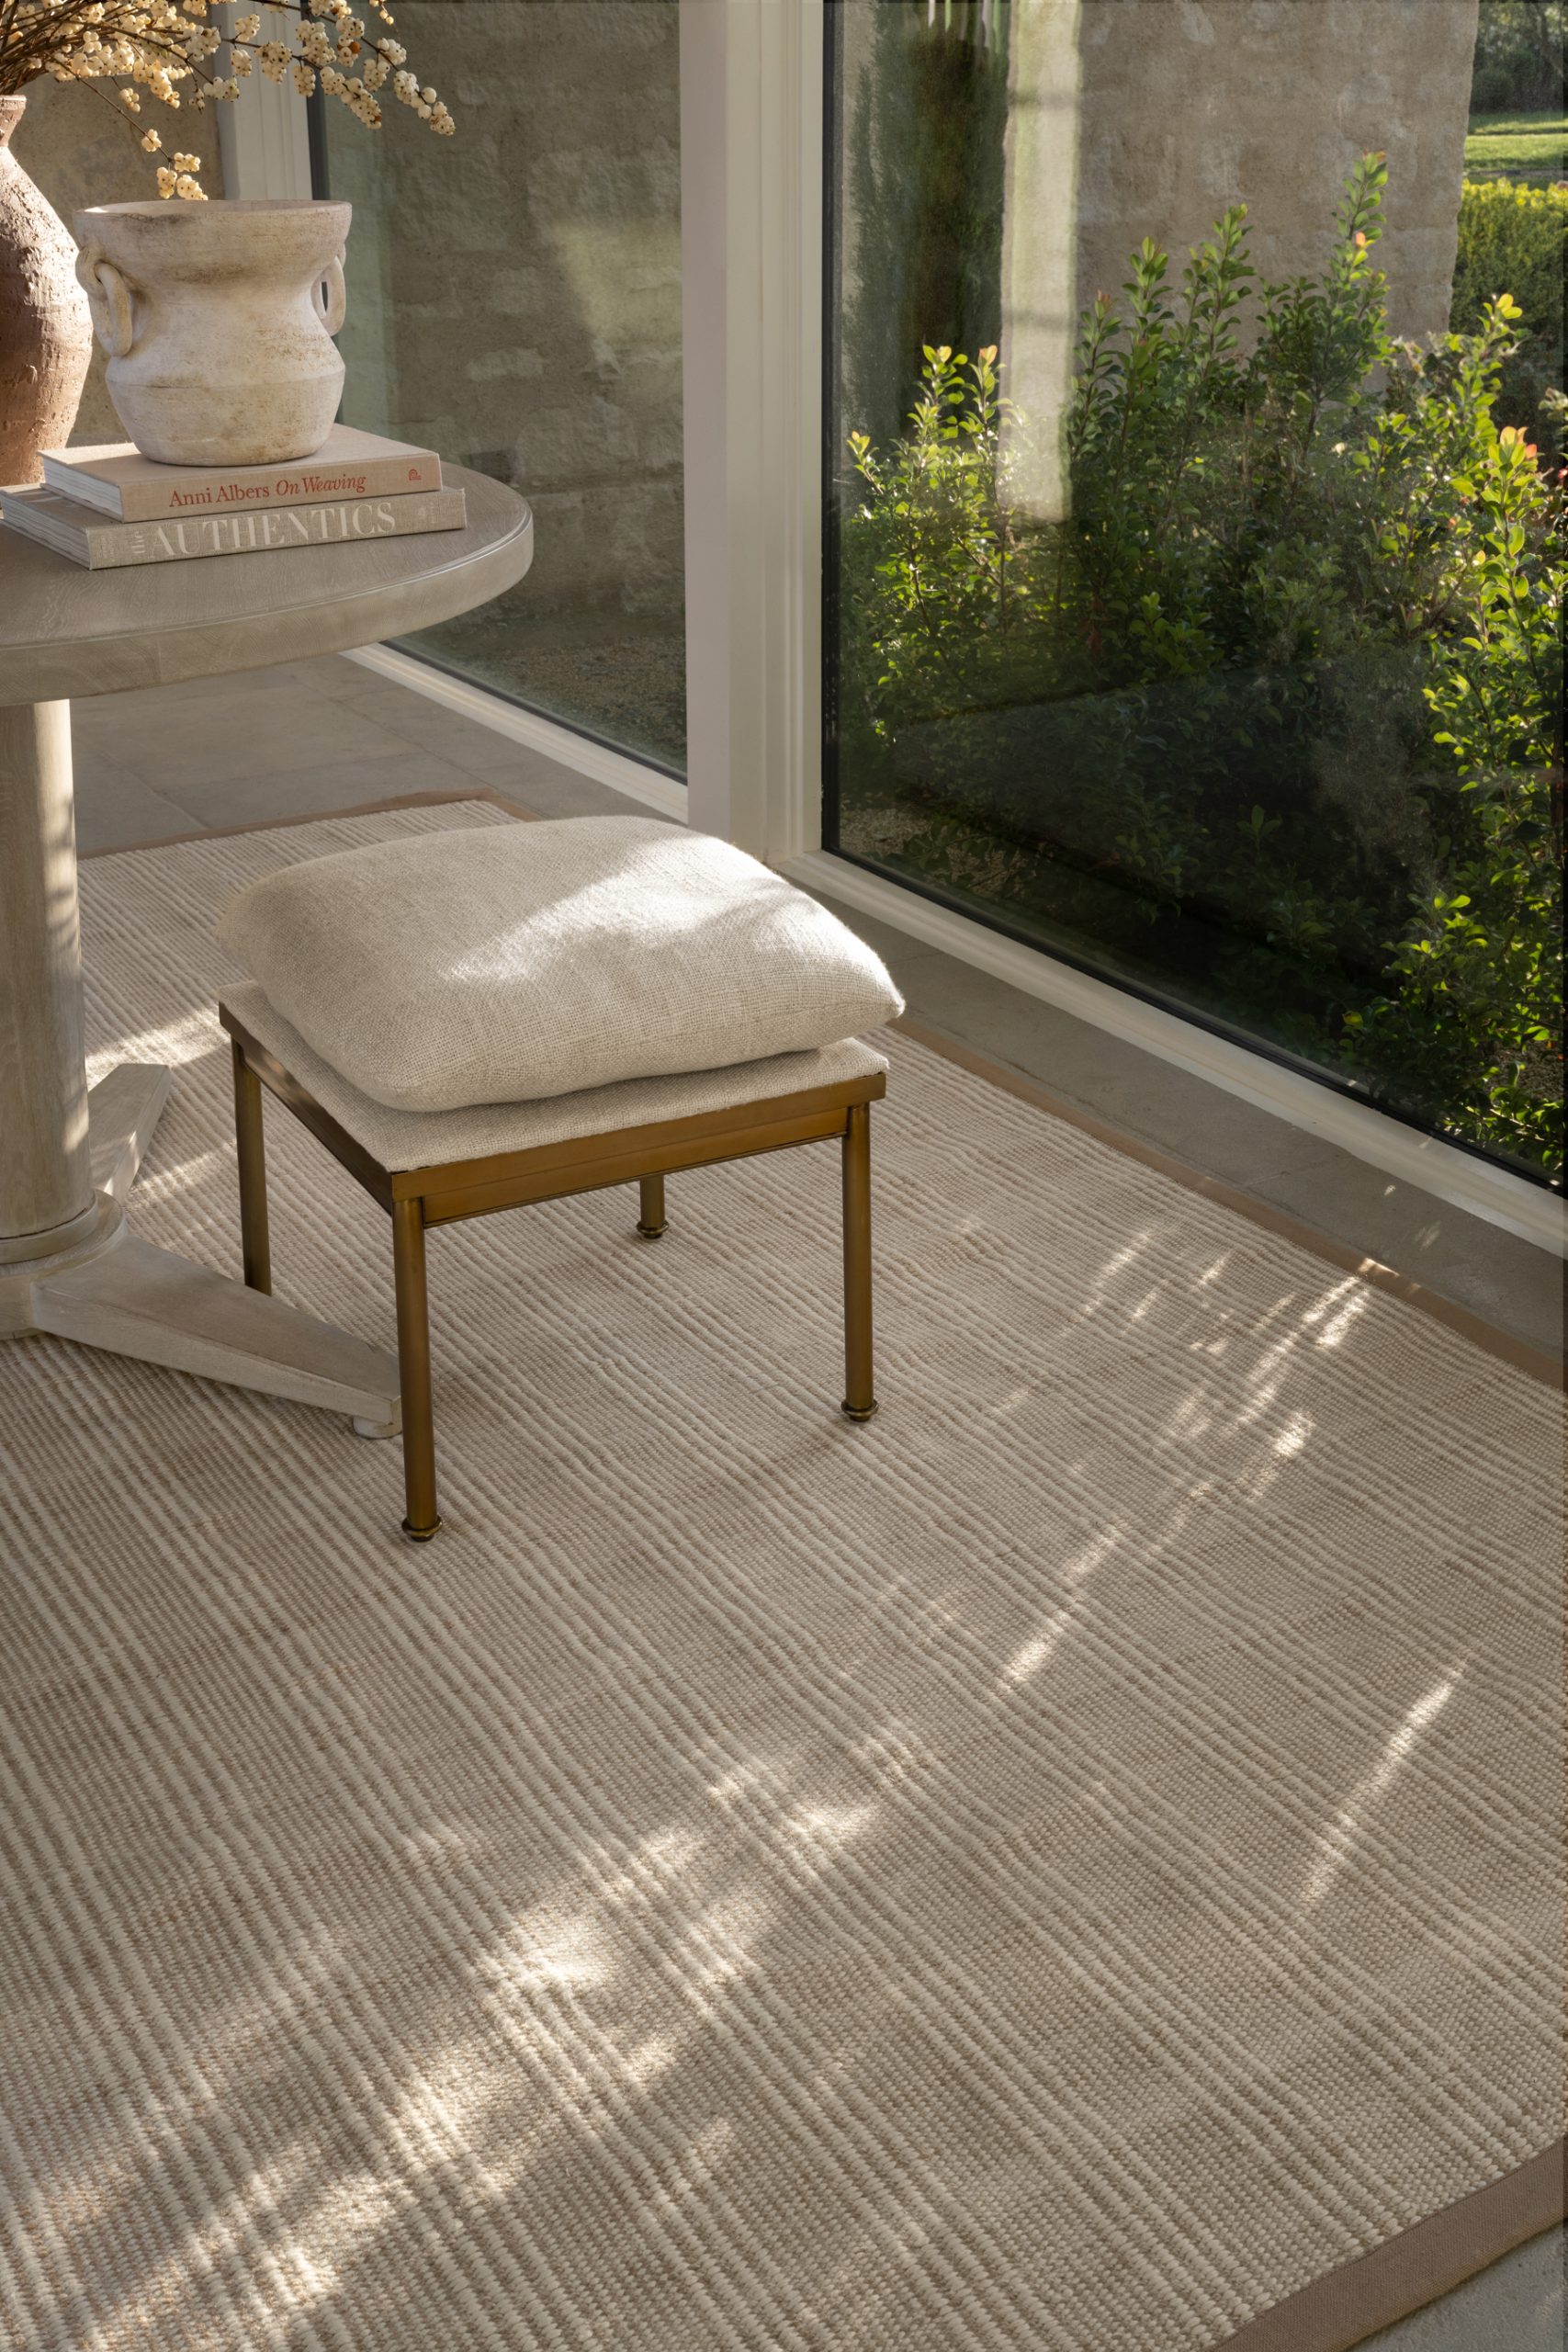 indoor/outdoor rug in entryway with ottoman